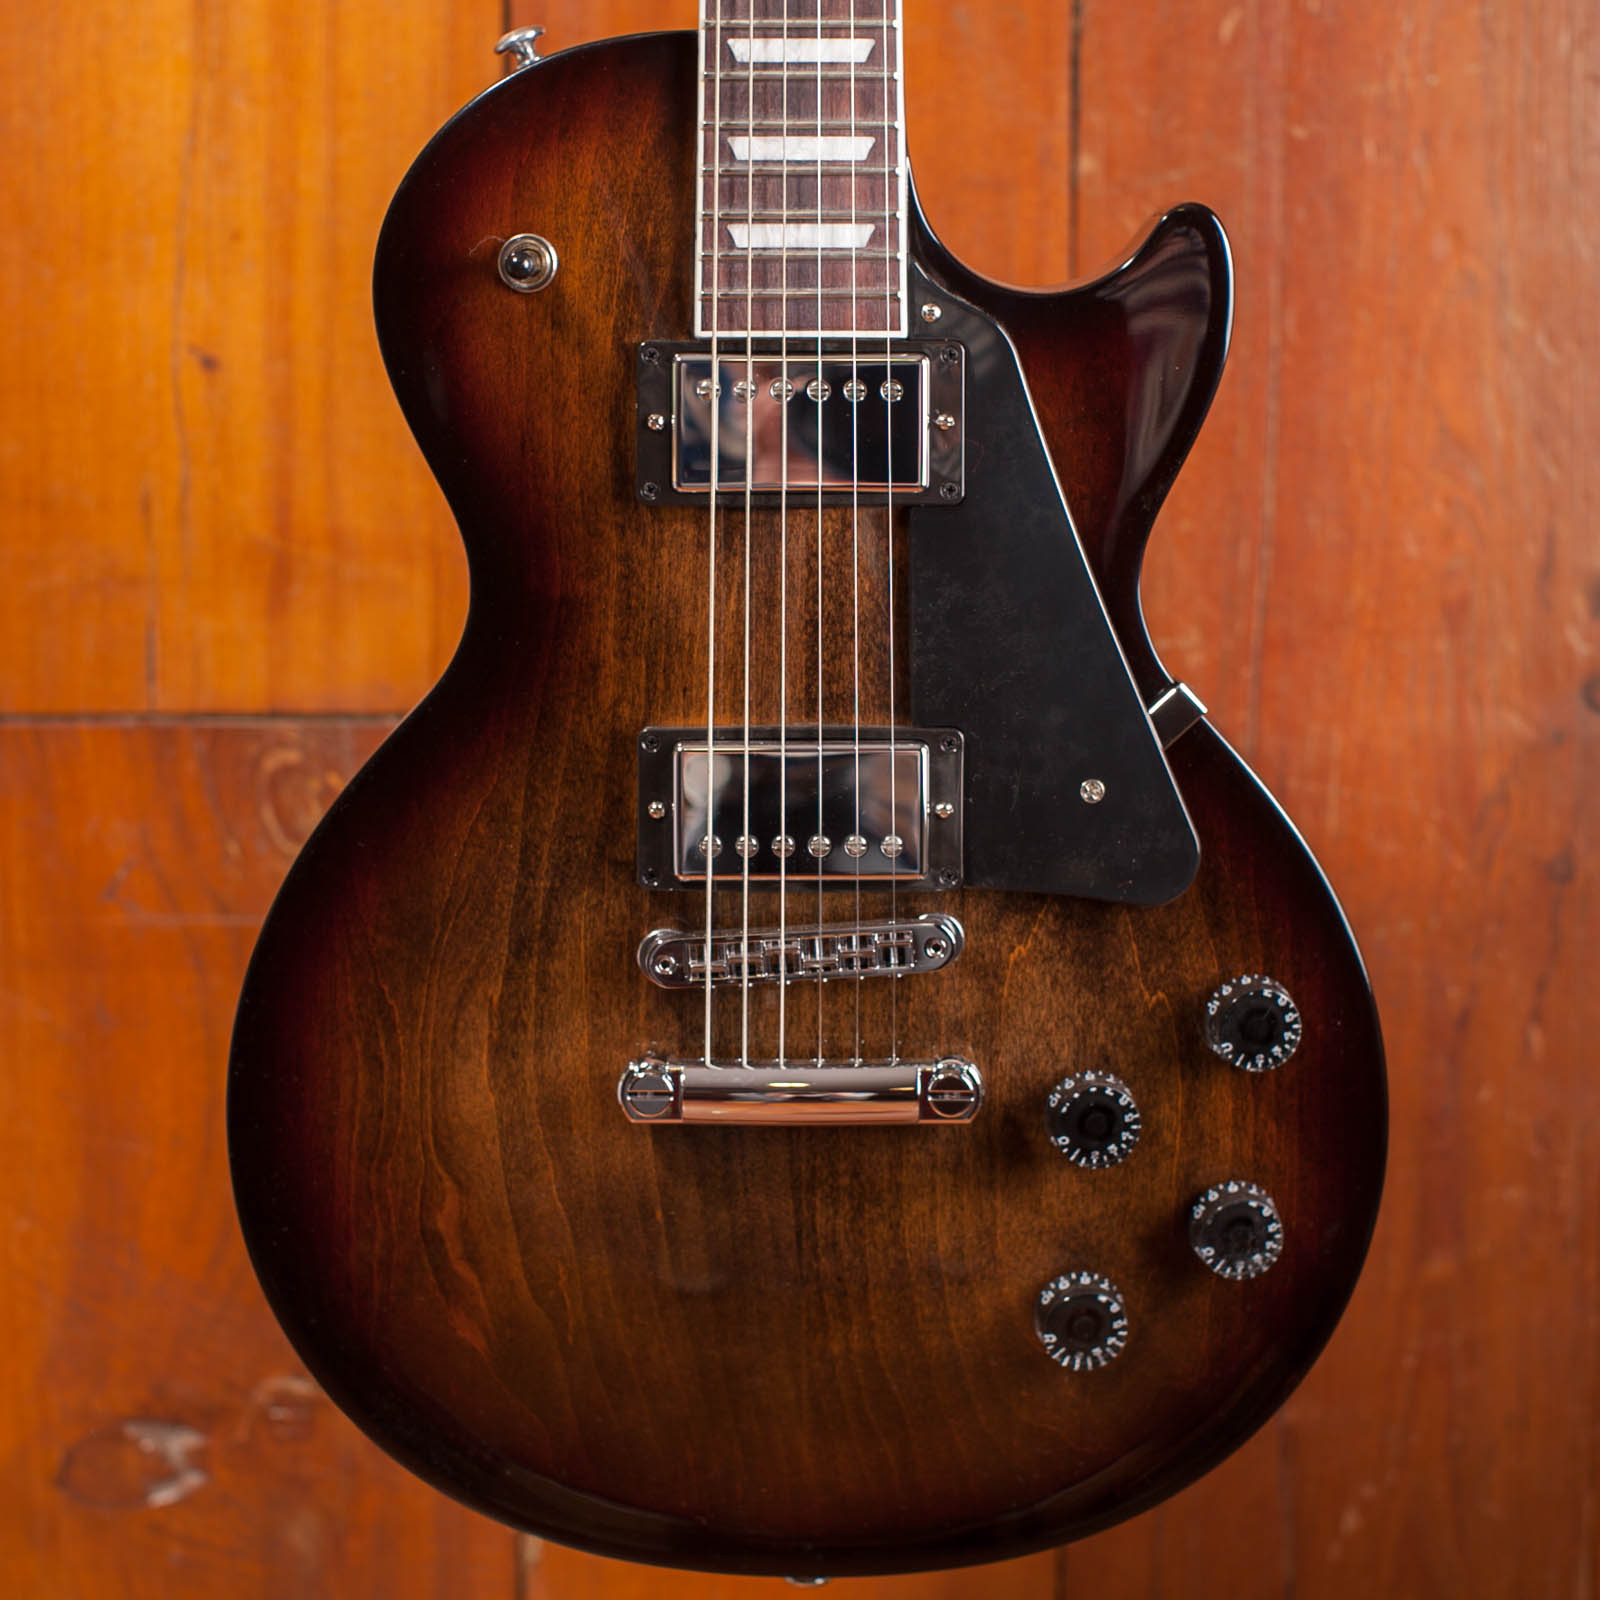 Gibson Les Paul 2018 Smokehouse Burst Guitar For Sale Max Guitar